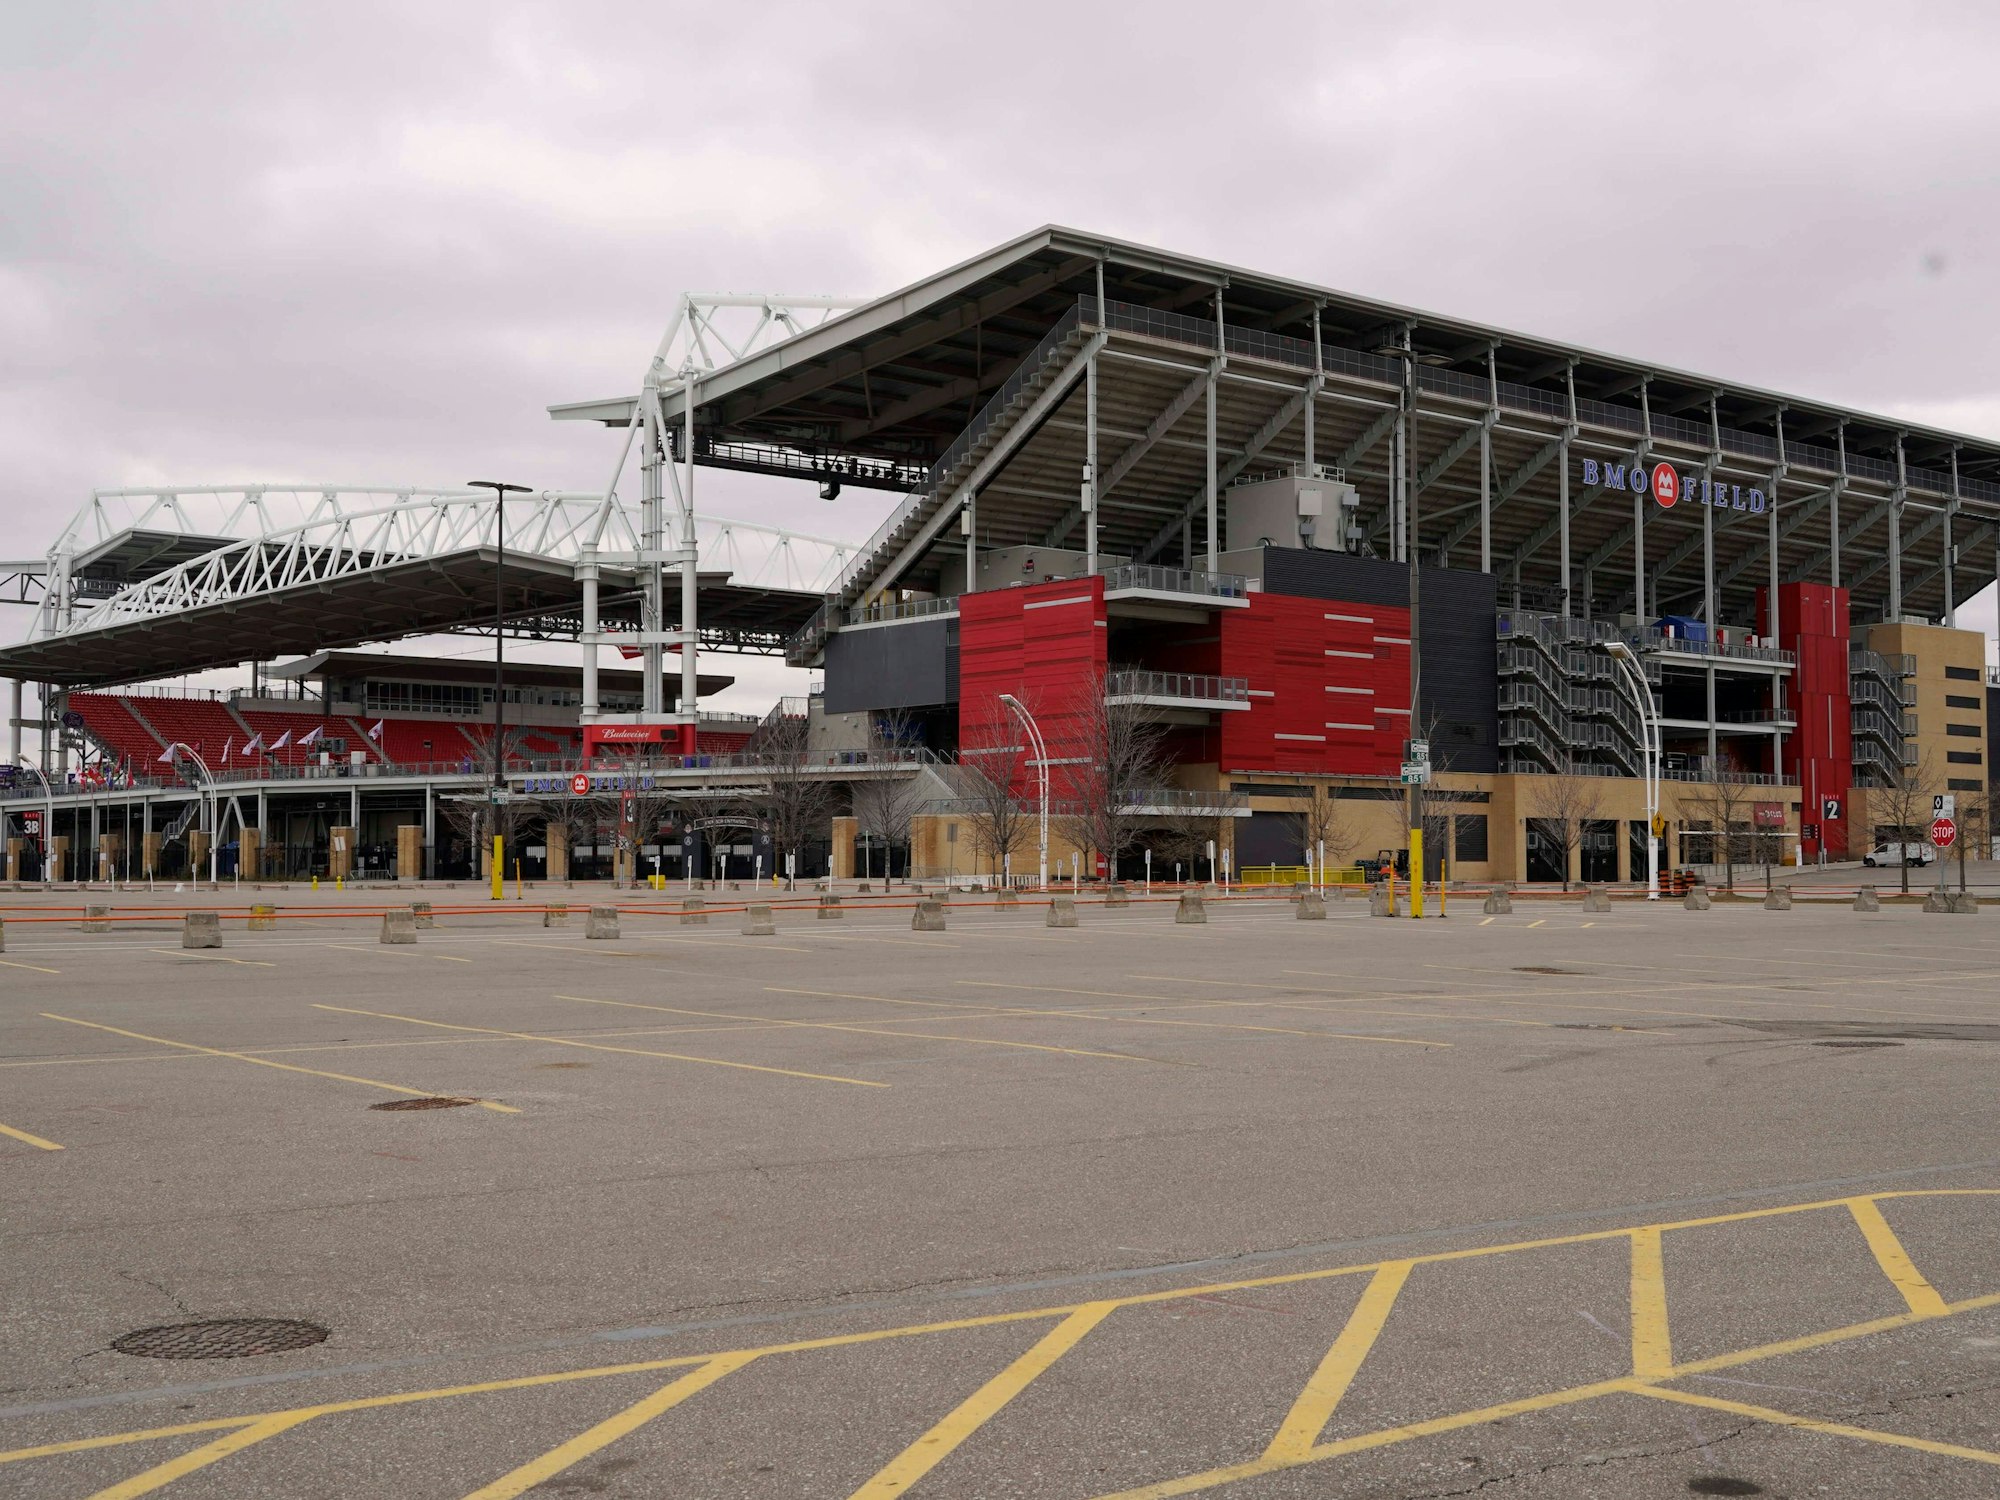 Das BMO Field Stadion in Toronto, Kanada am 14. März 2020